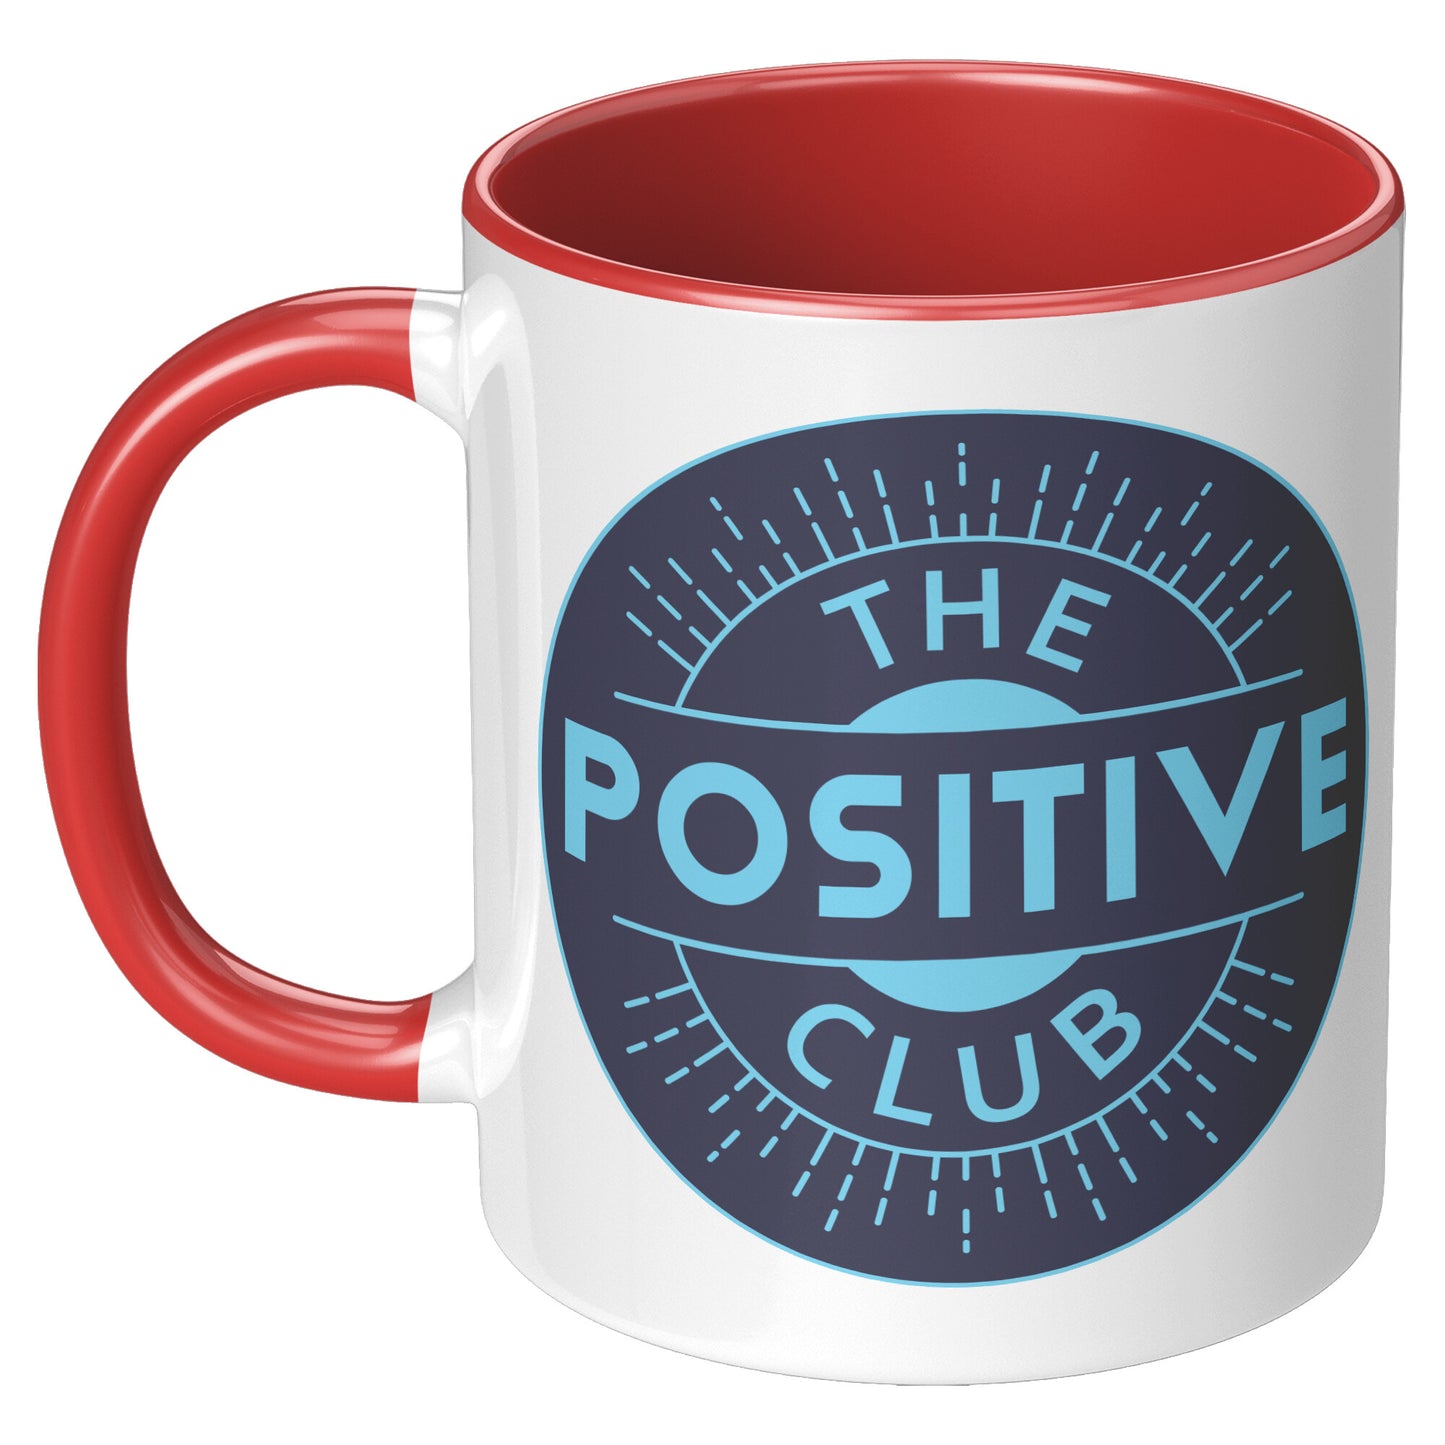 11oz Accent Mug The Positive Club ( Free Shipping )